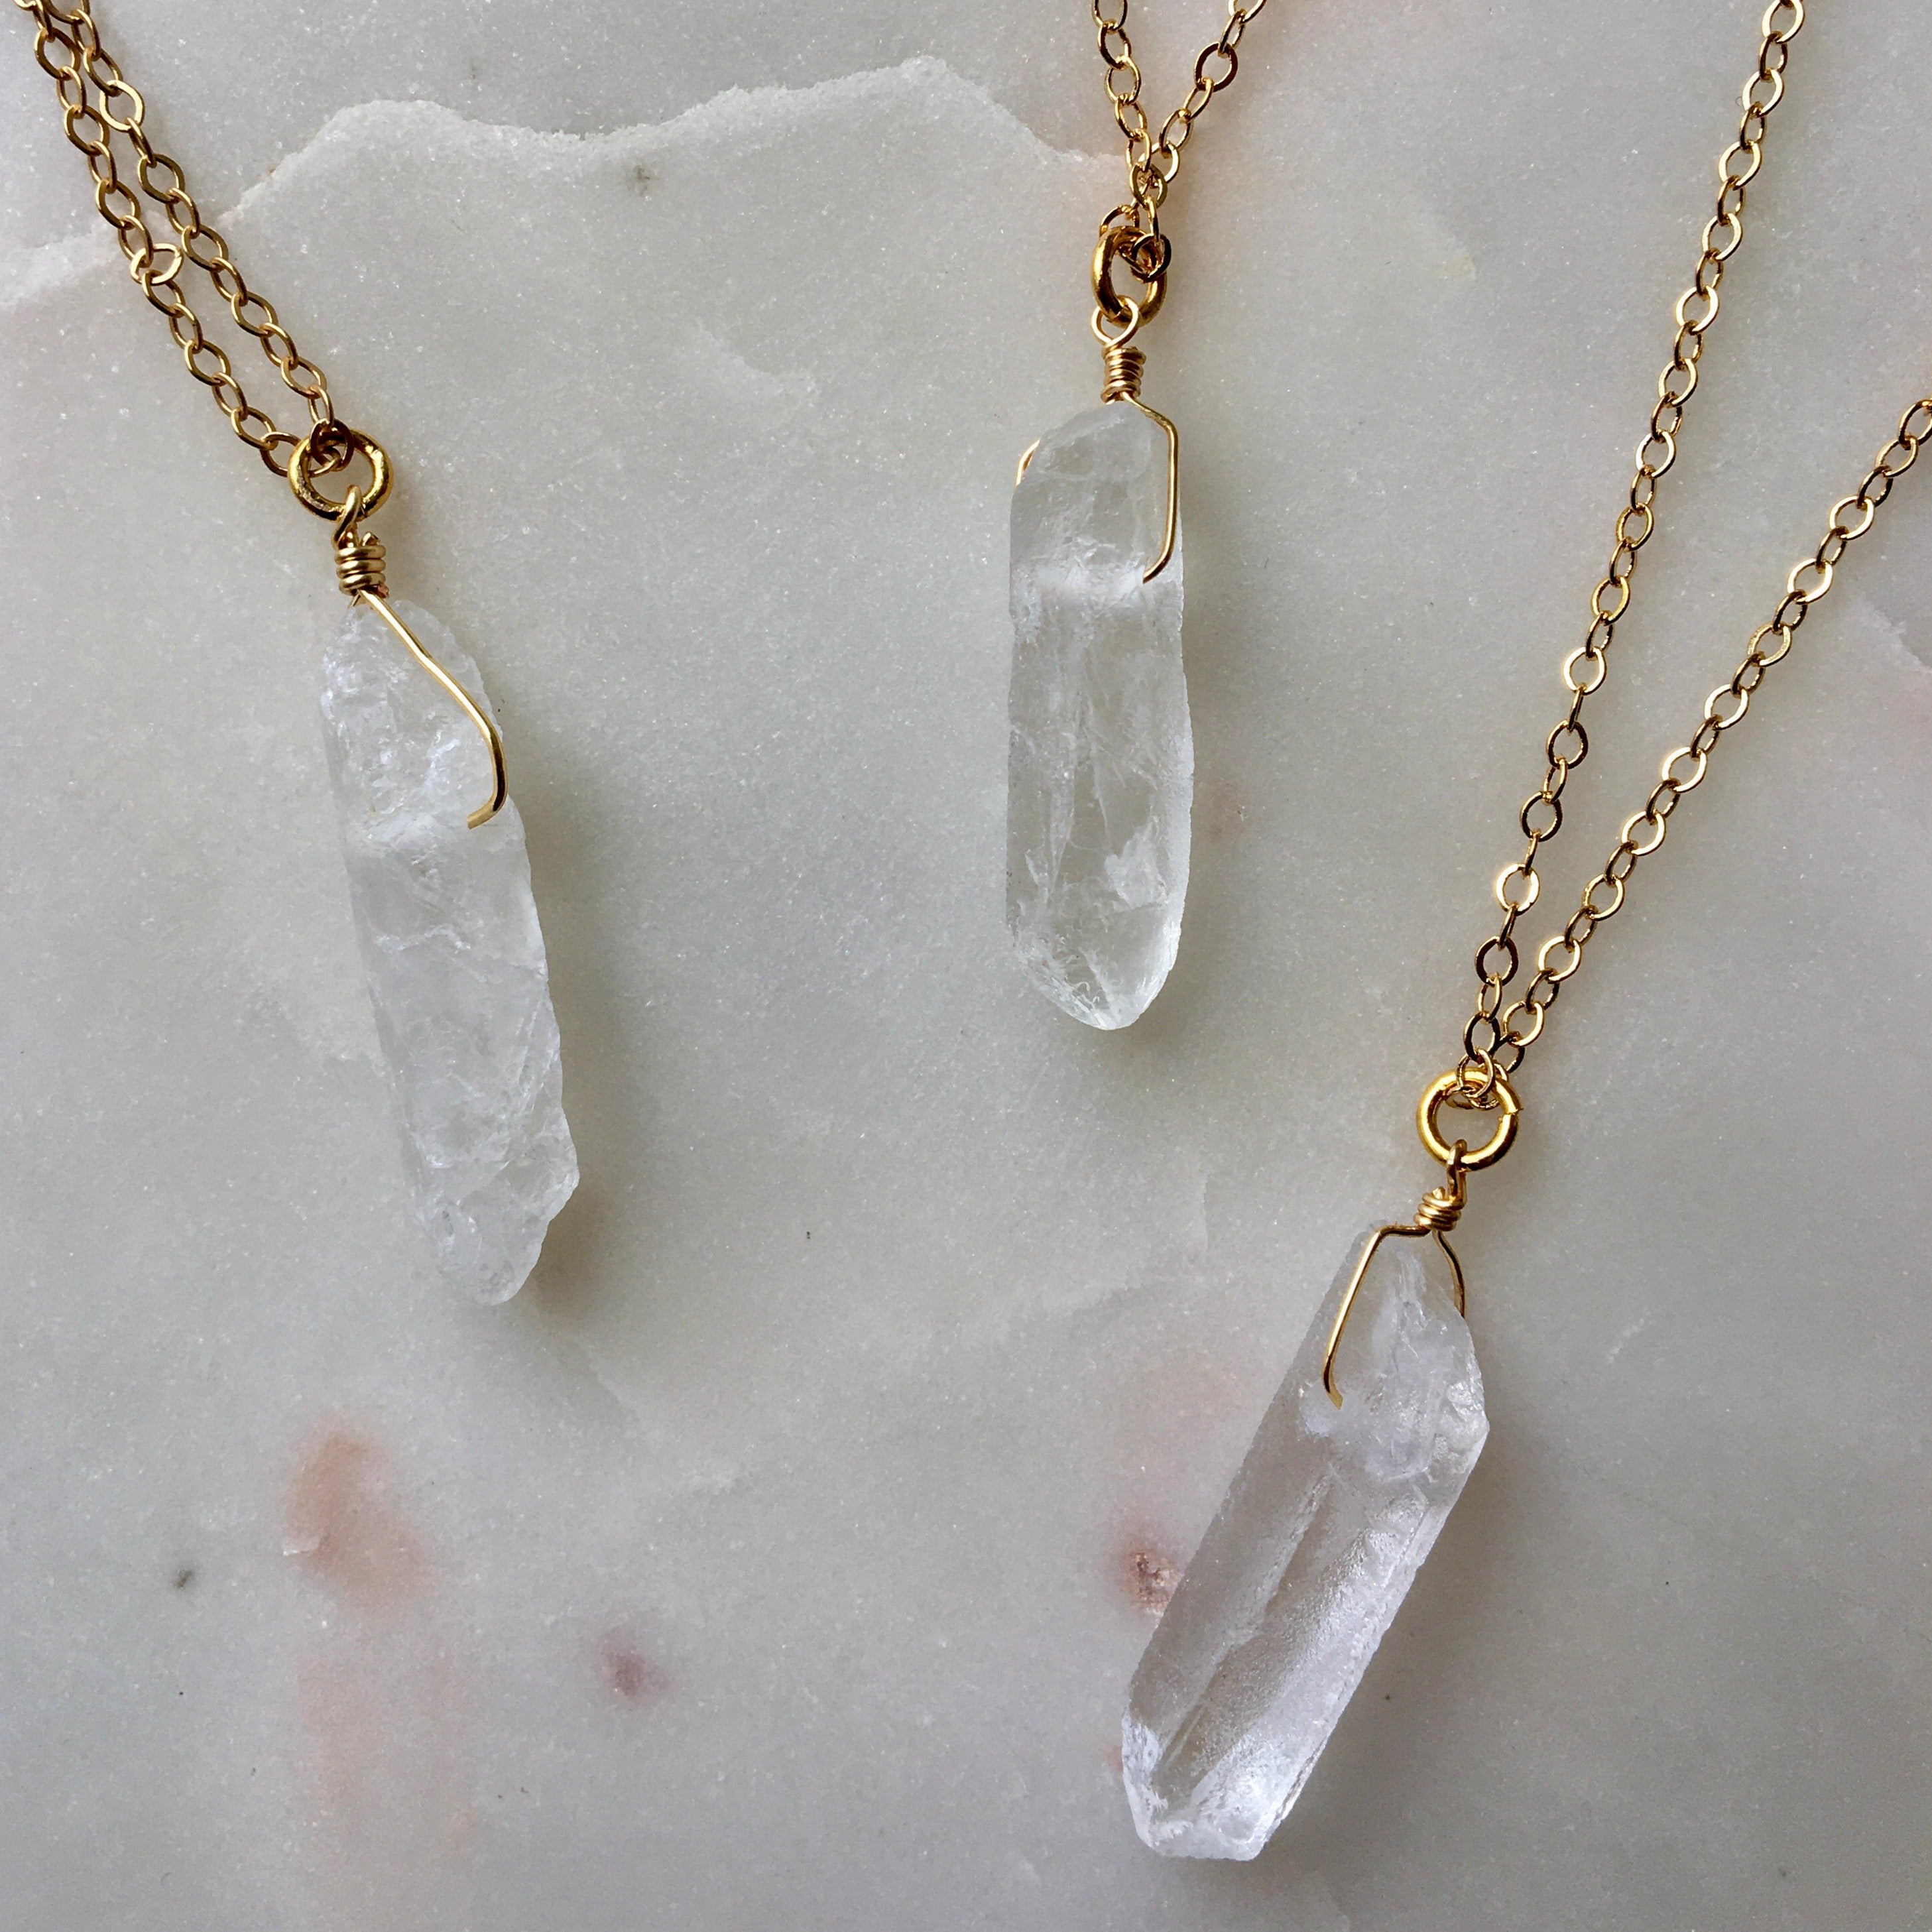 Quartz Crystal Pendant Necklace - Many color options